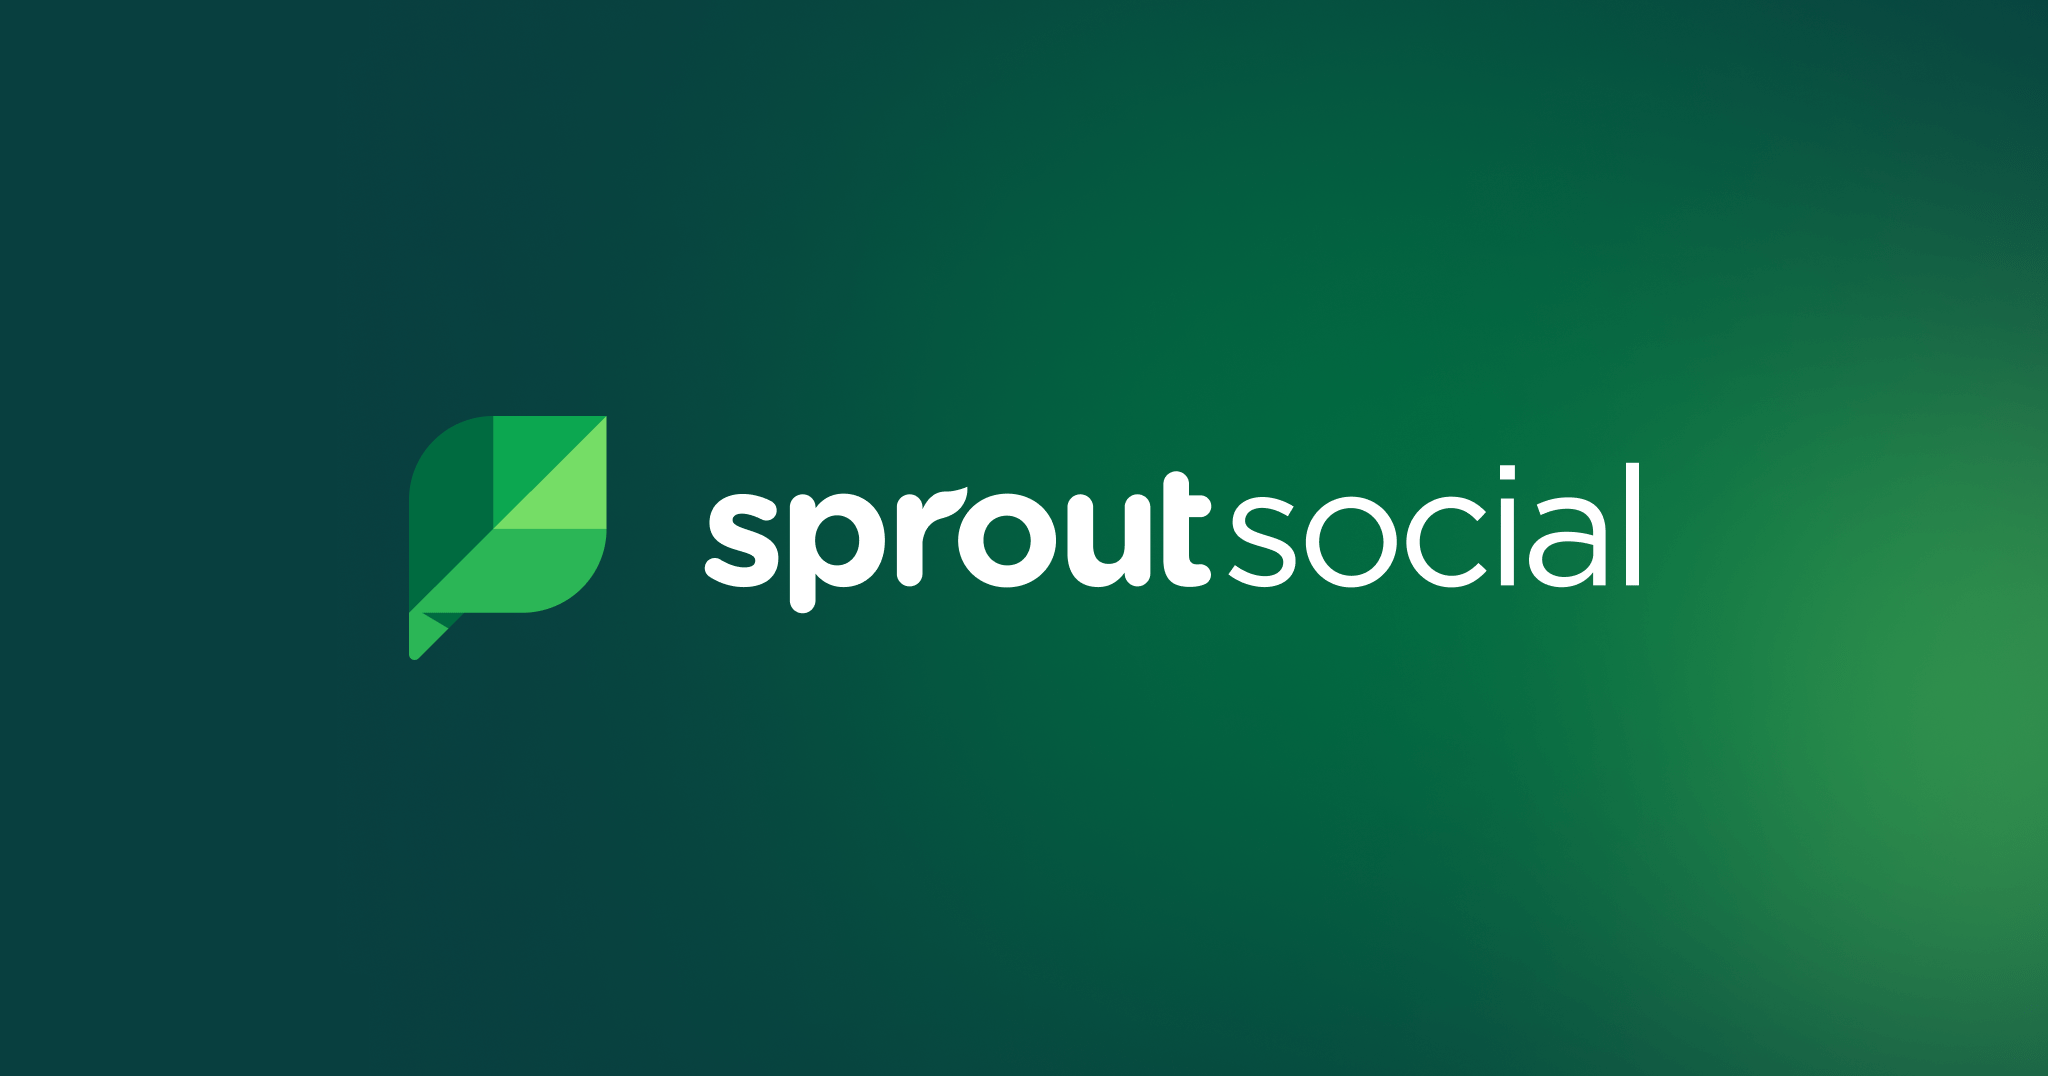 (c) Sproutsocial.com